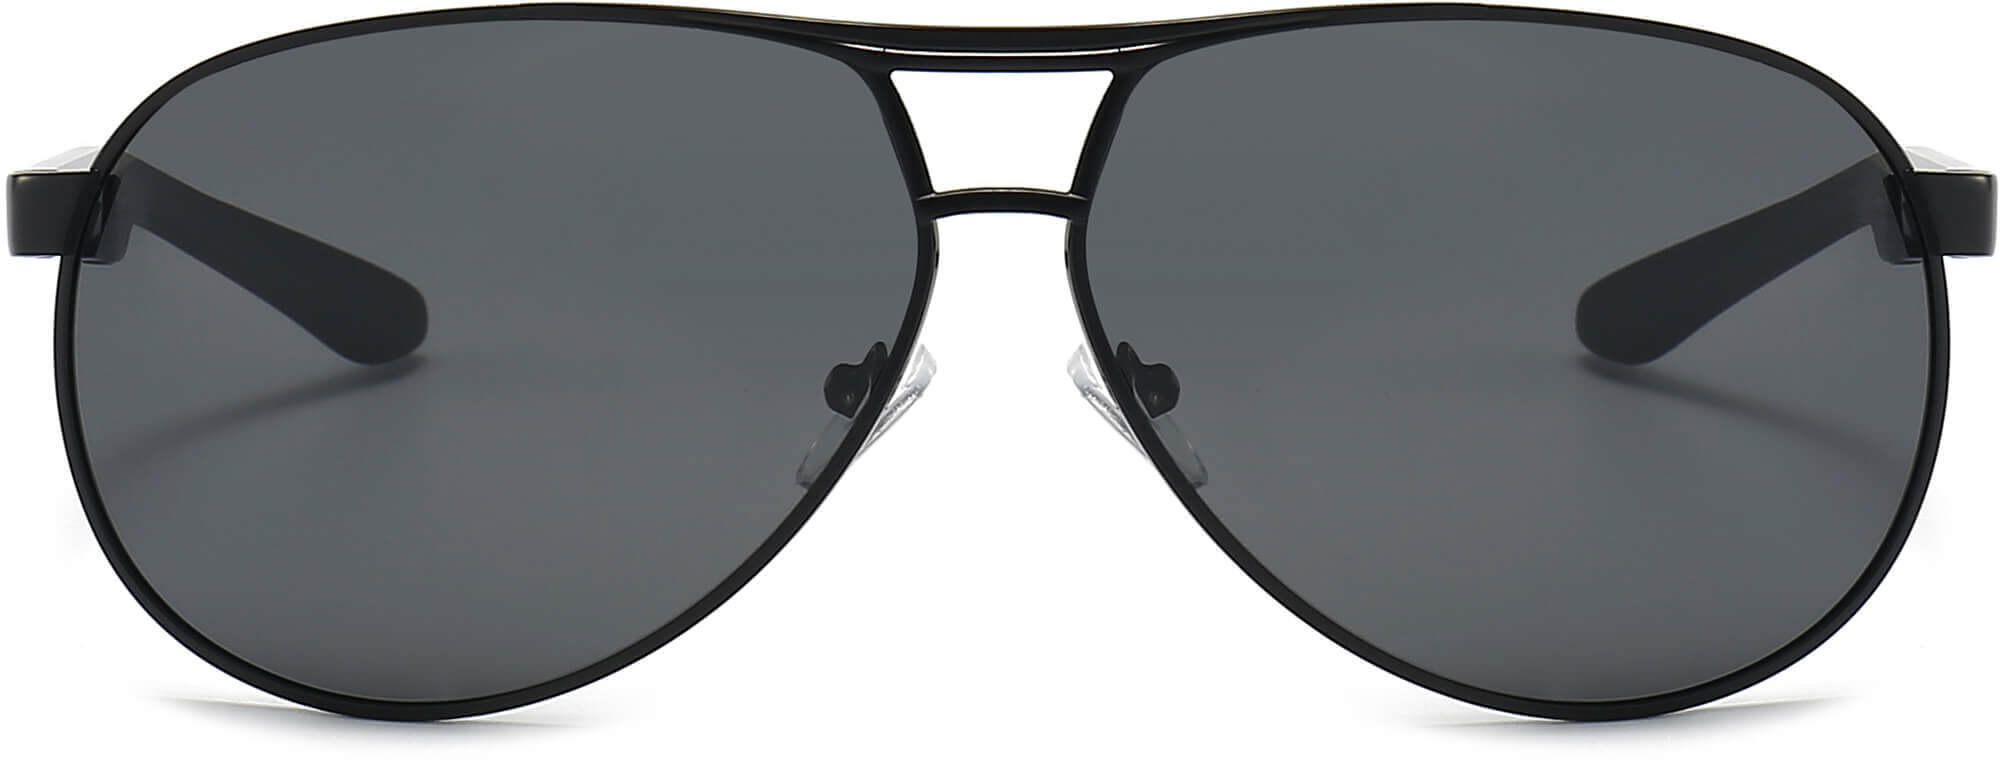 Diga Black Stainless steel Sunglasses from ANRRI